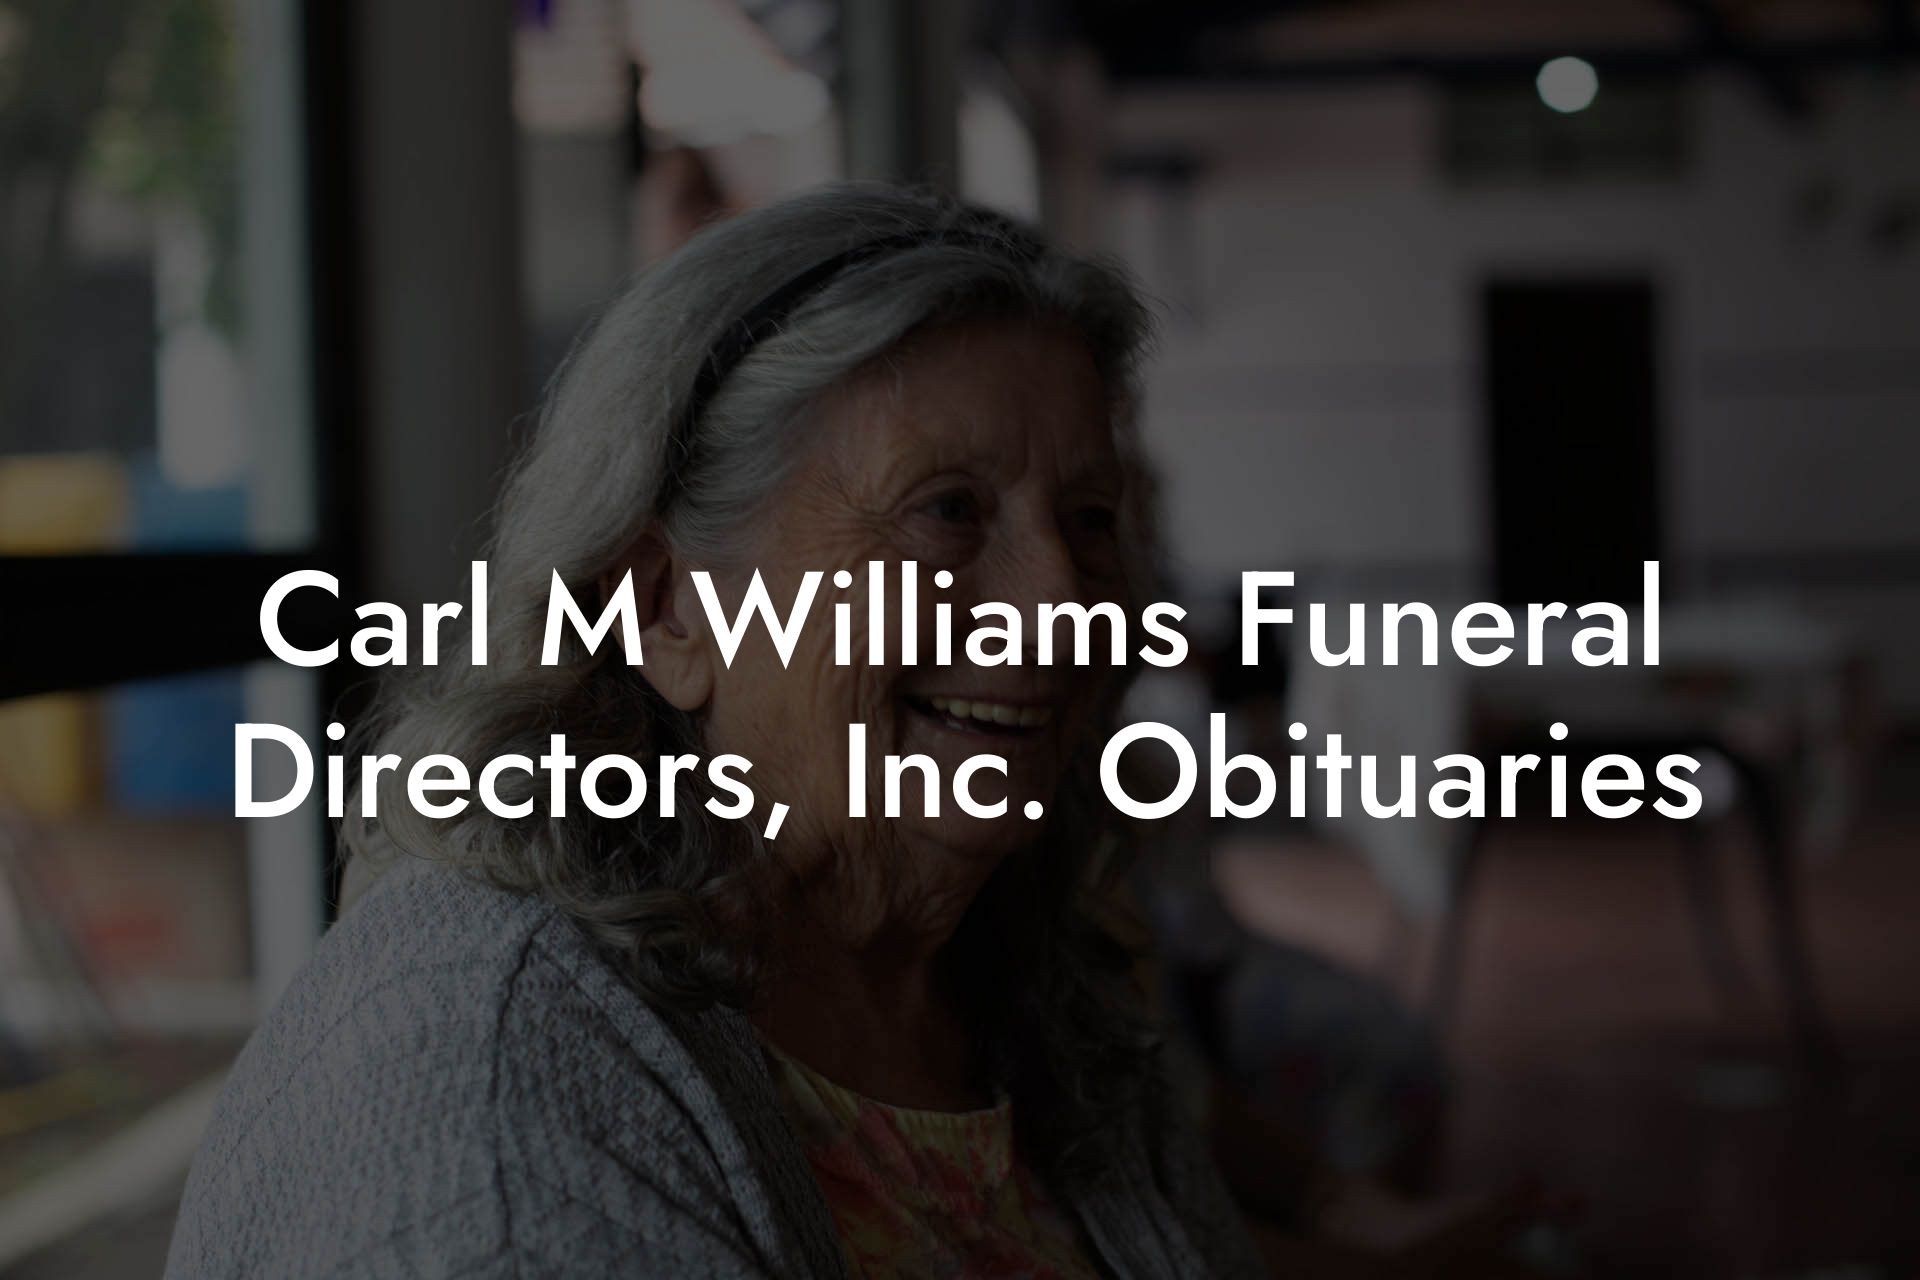 Carl M Williams Funeral Directors, Inc. Obituaries